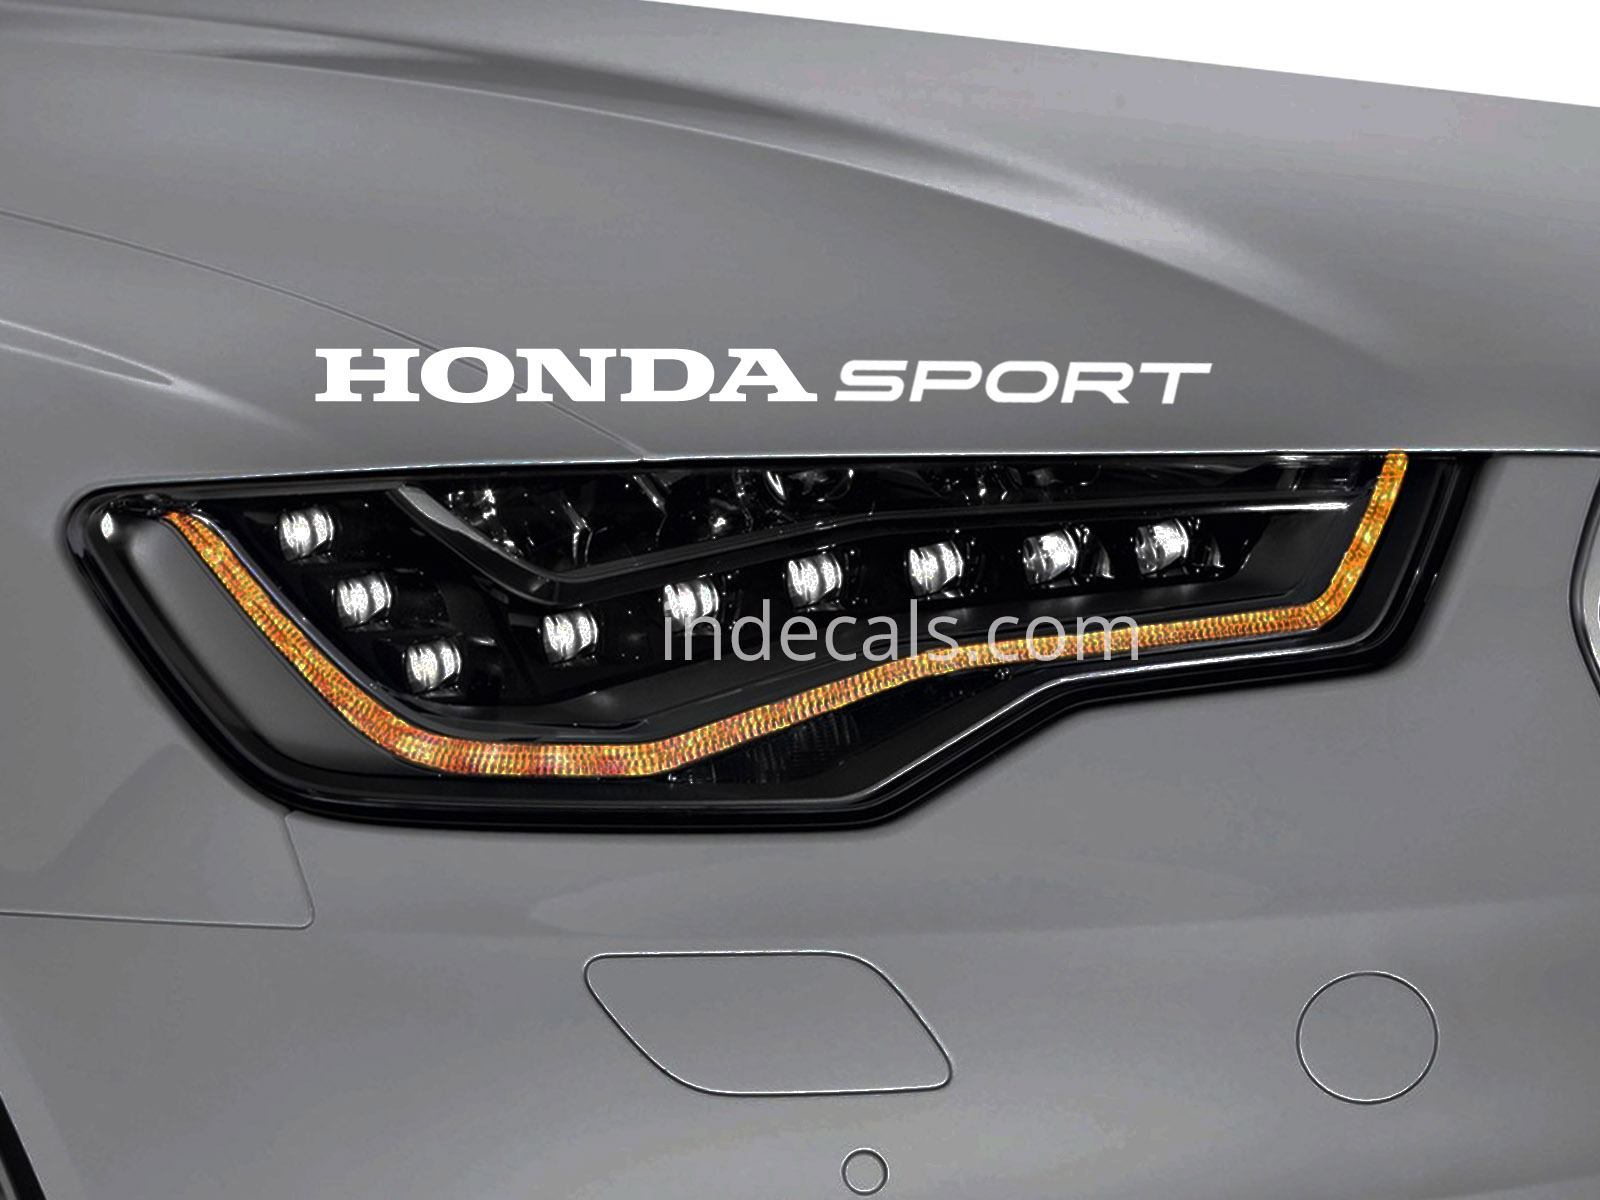 1 x Honda Sport Sticker for Eyebrow - White